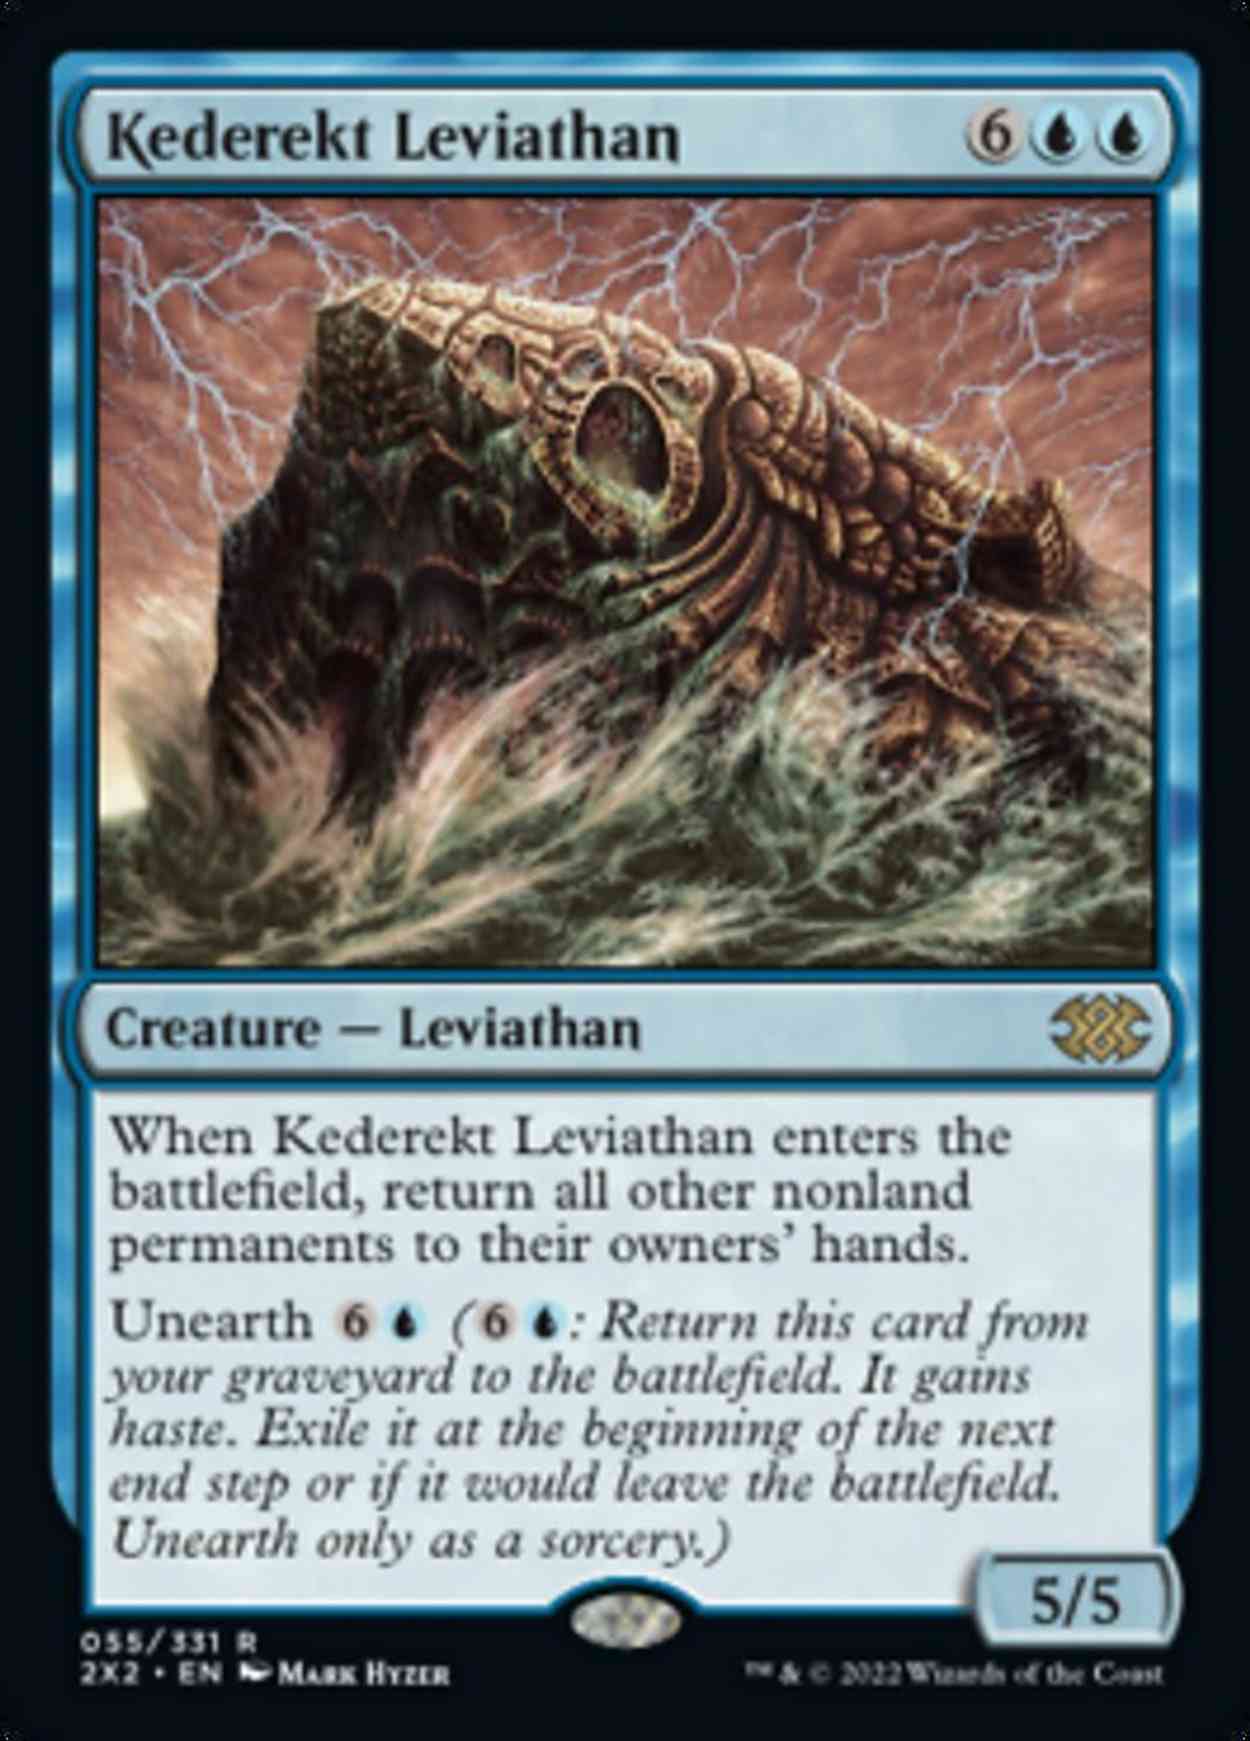 Kederekt Leviathan magic card front